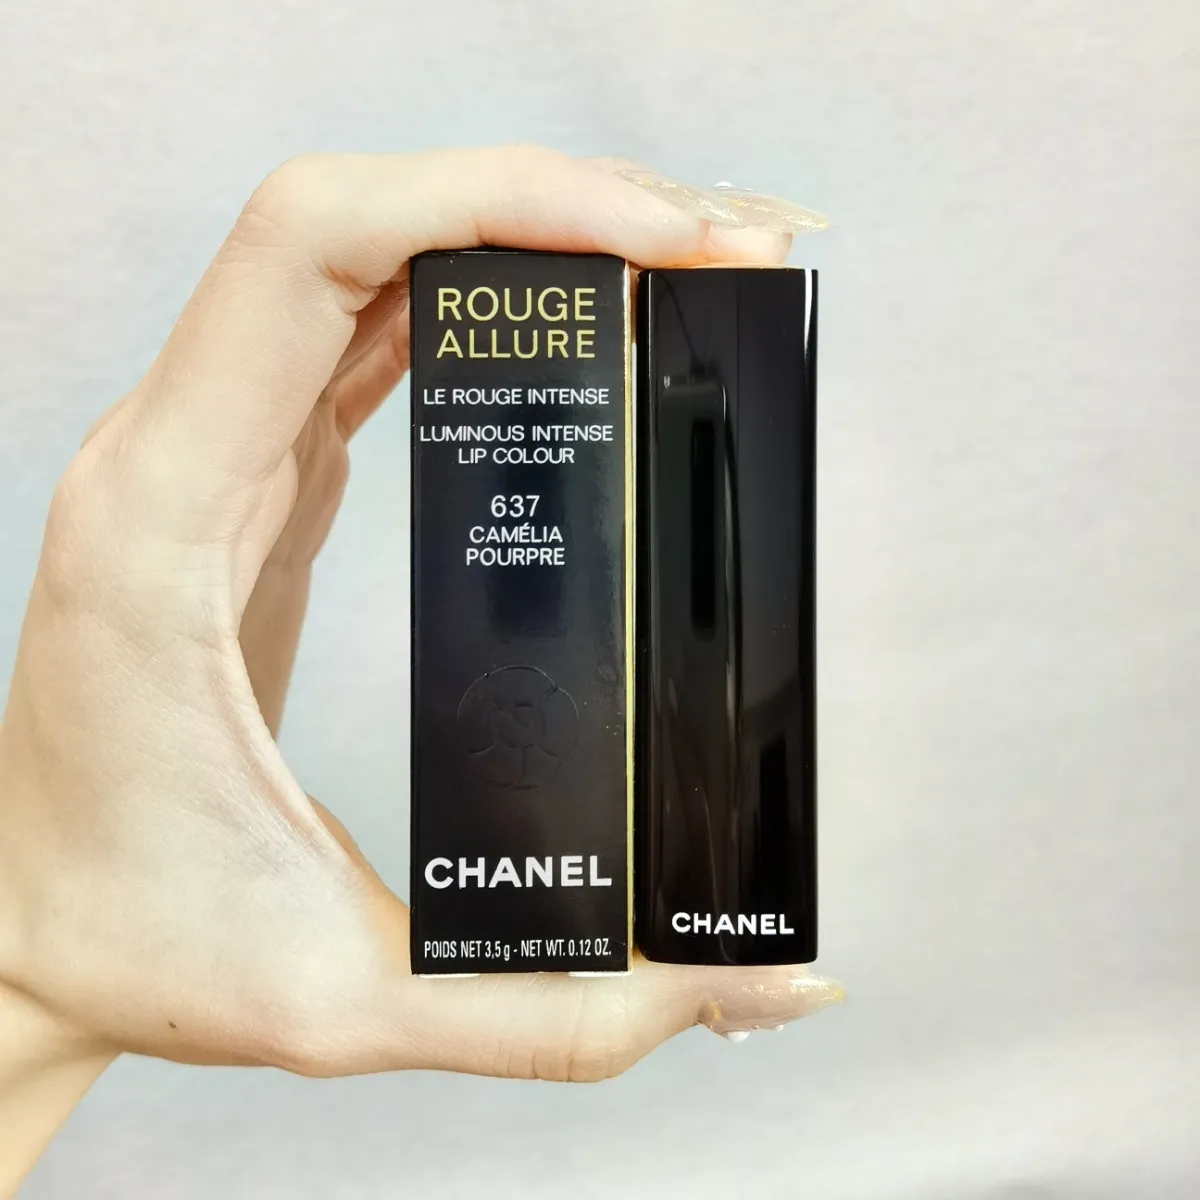 Chanel Rouge Allure Ink Matte Liquid Lip Colour   202 Metallic Beige  6ml02oz  Lipstick gift set Liquid lip color Lip colour